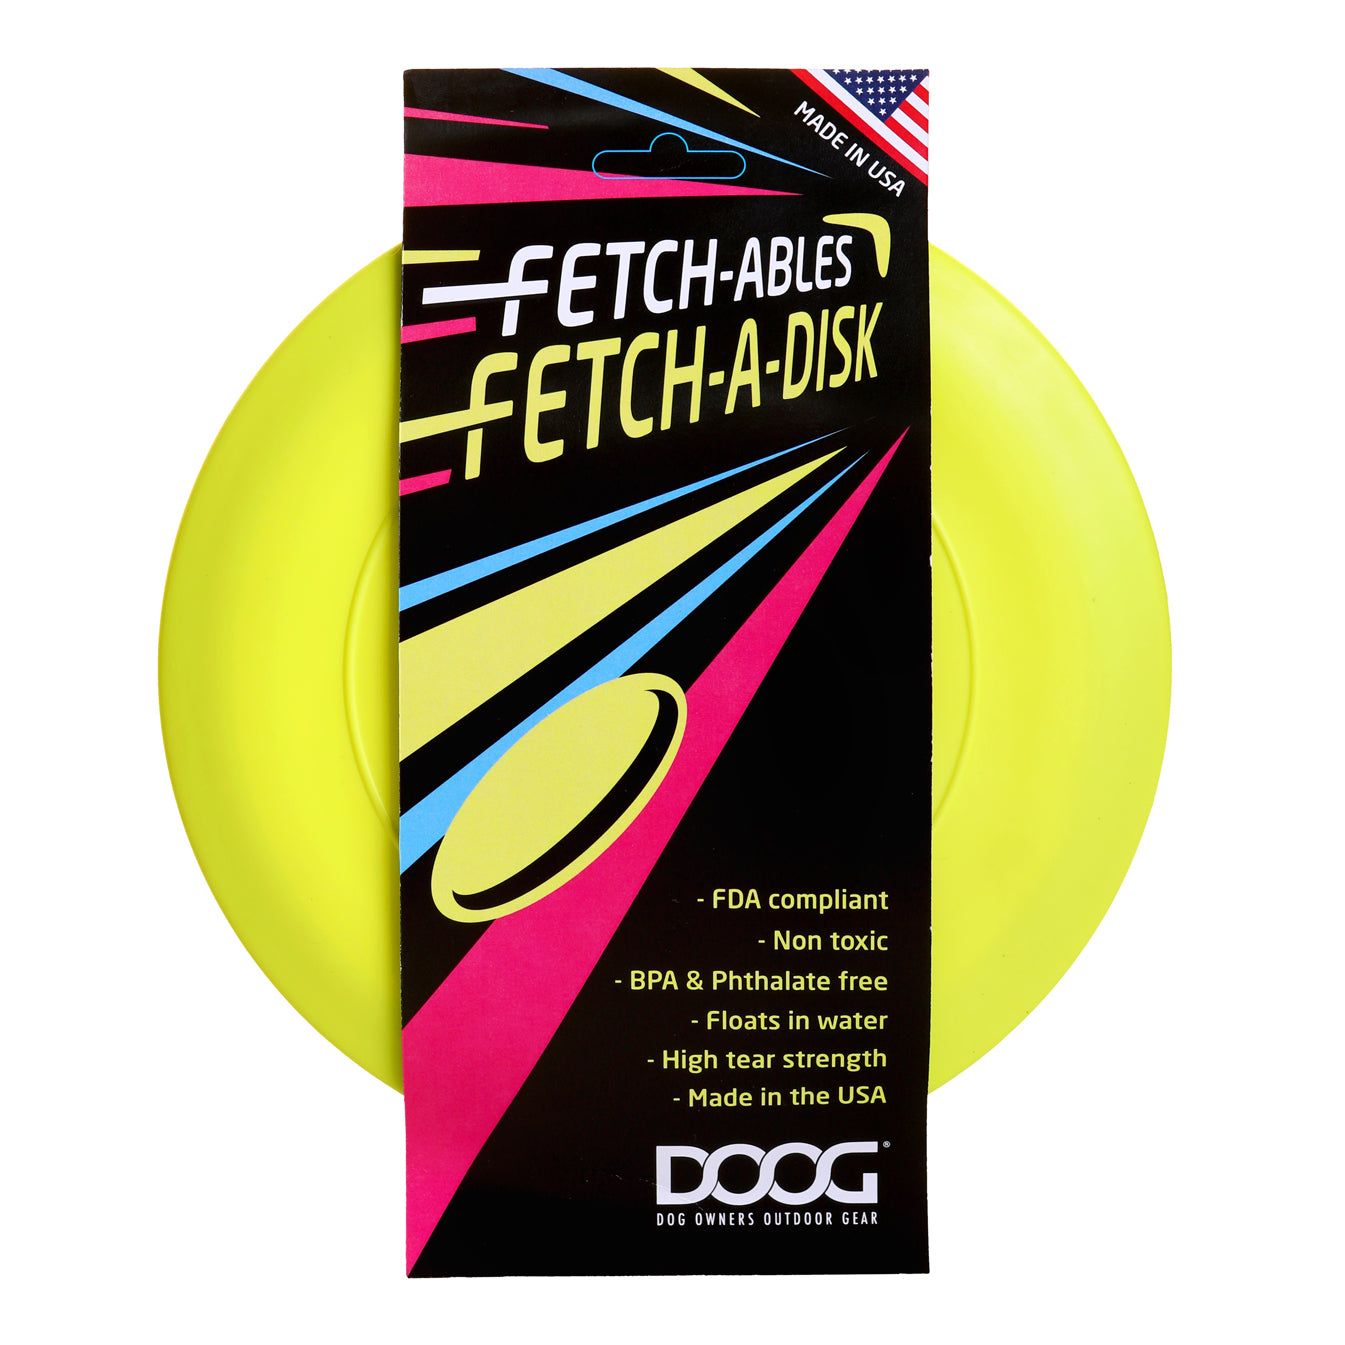 Fetch-Ables - Fetch-A-Disk